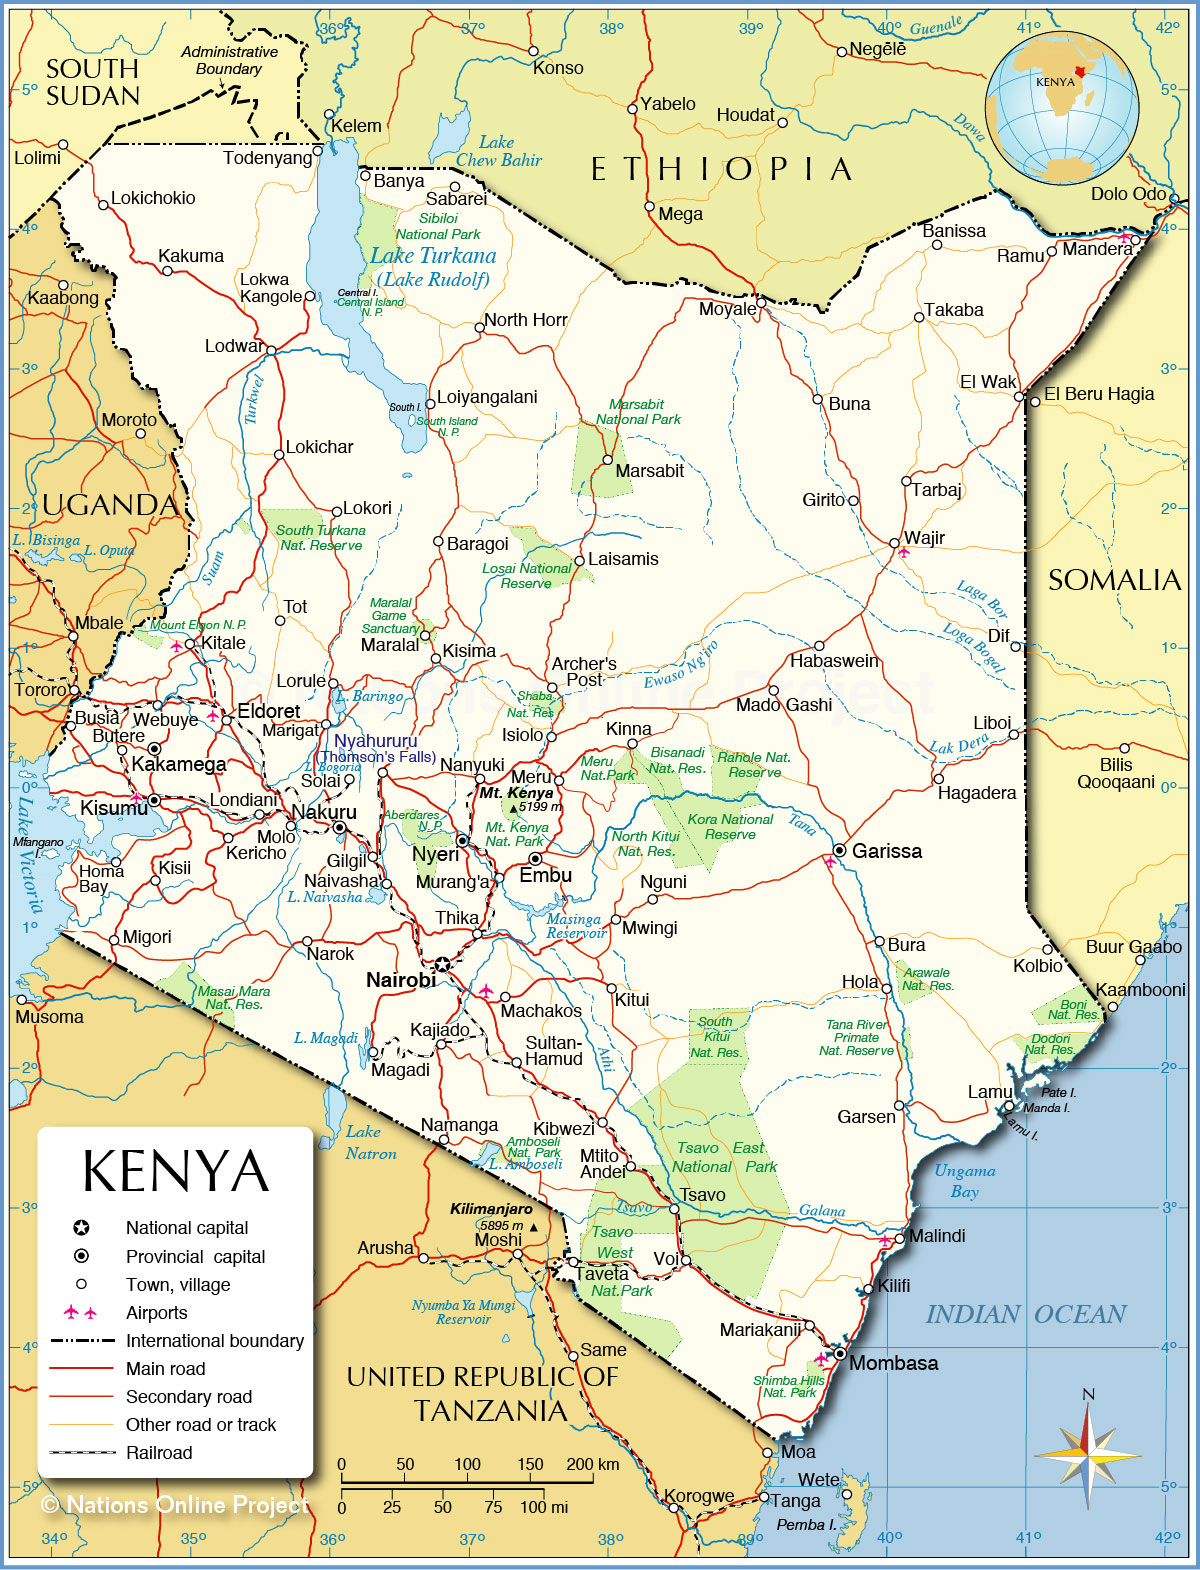 map of kenya africa Political Map Of Kenya Nations Online Project map of kenya africa